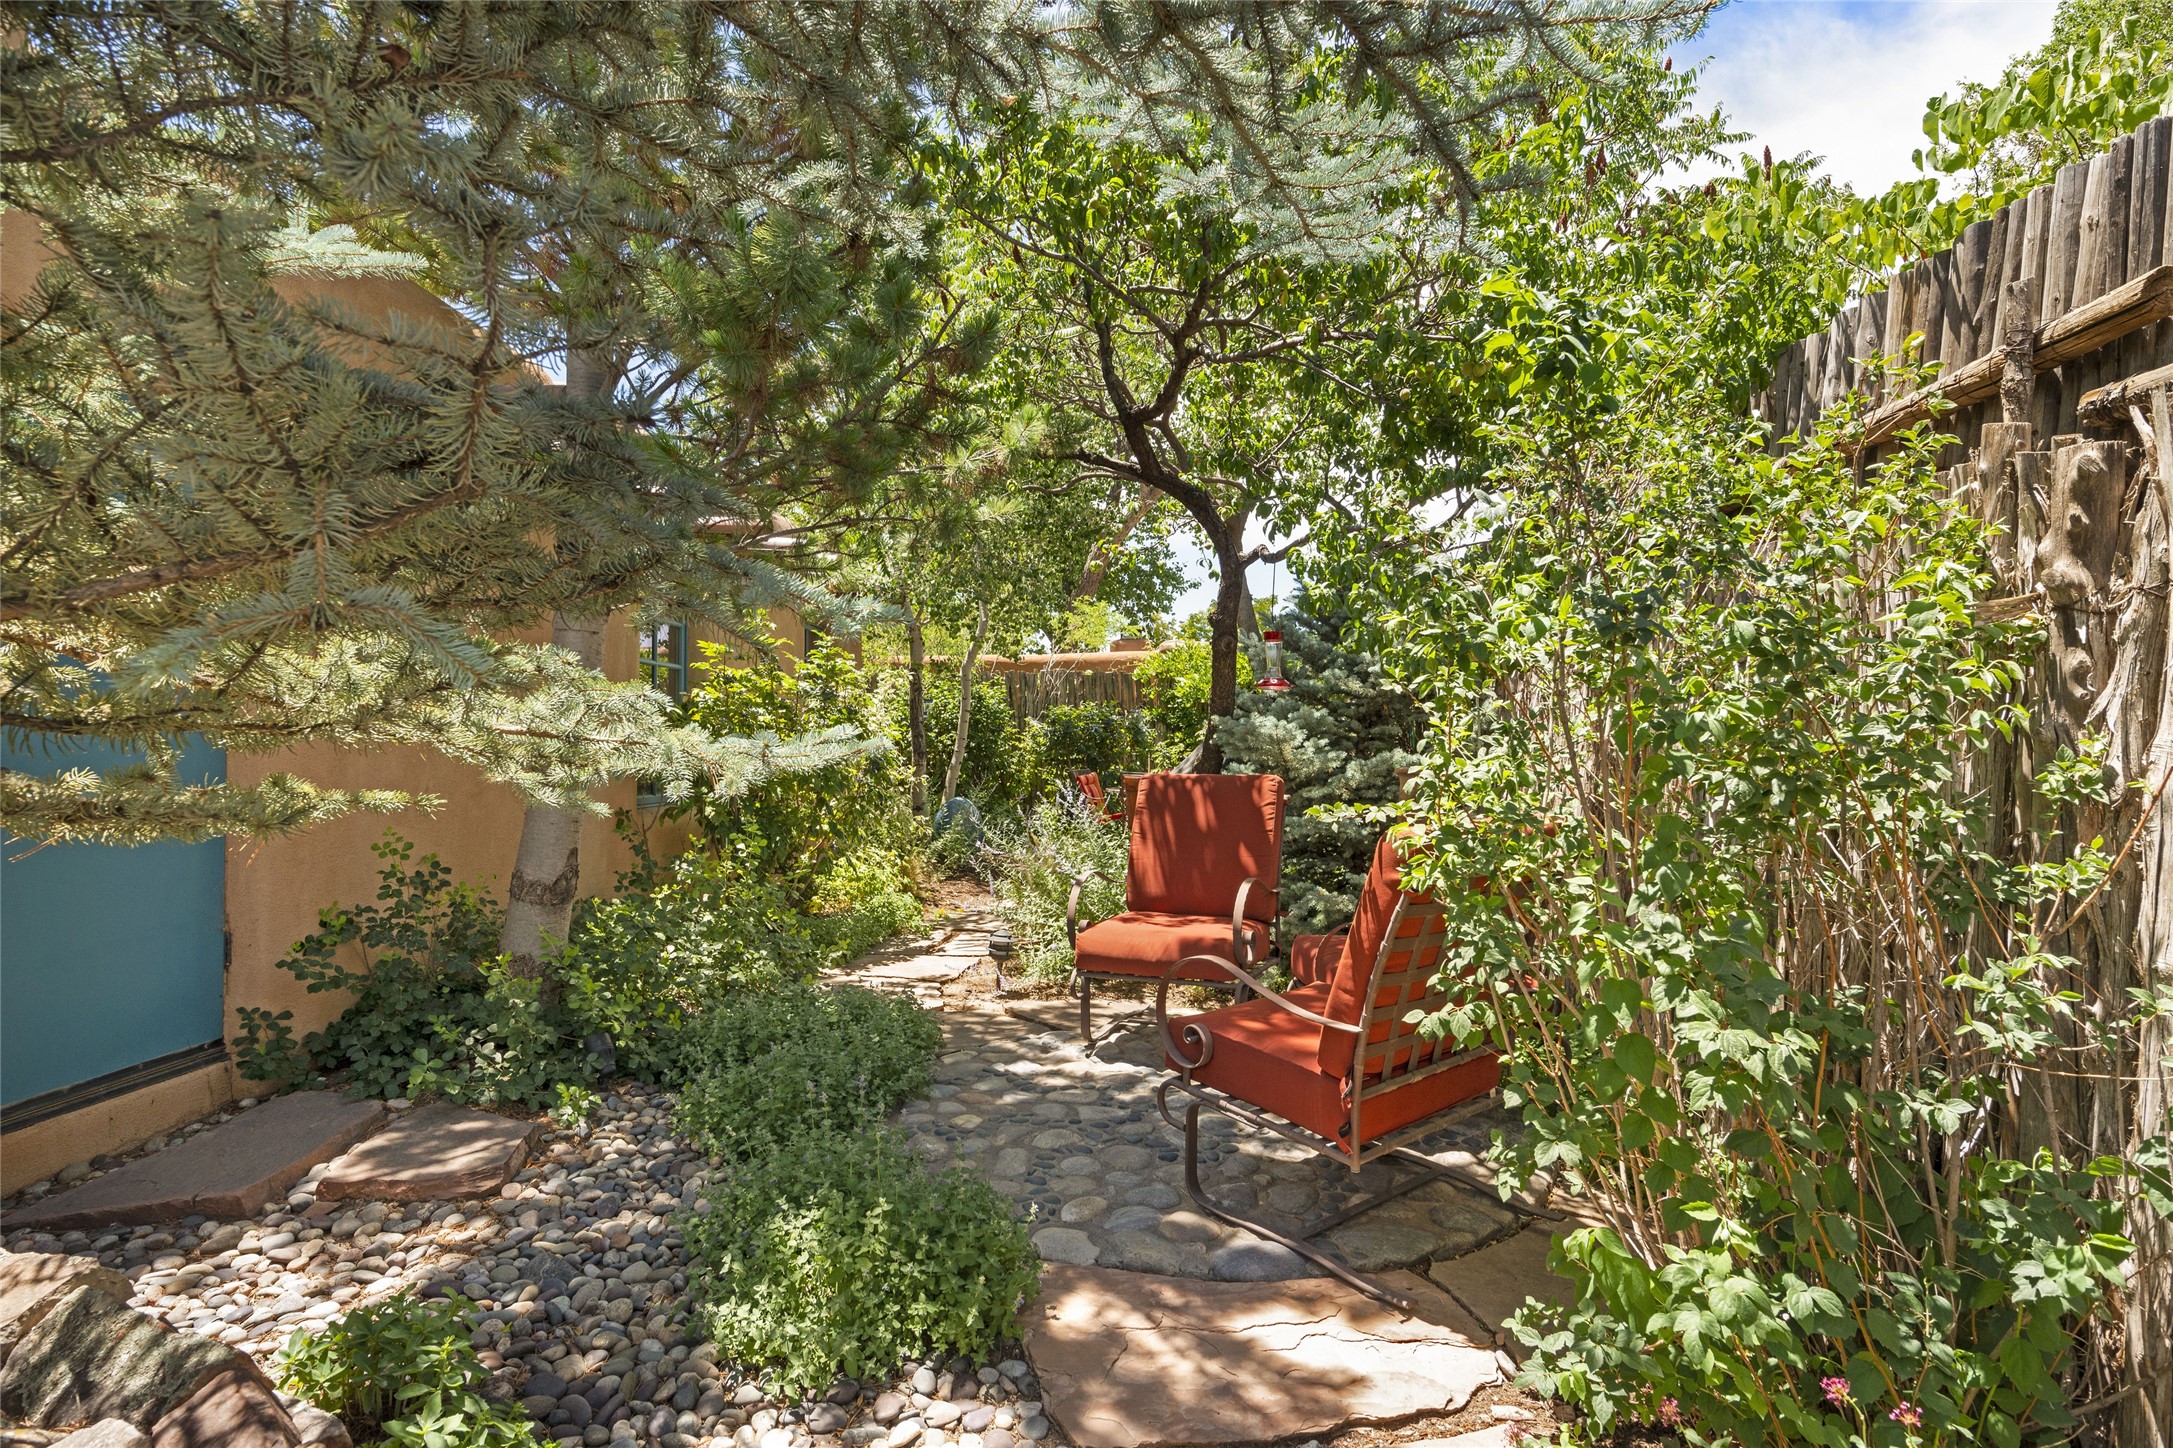 Private garden spaces surround the home.